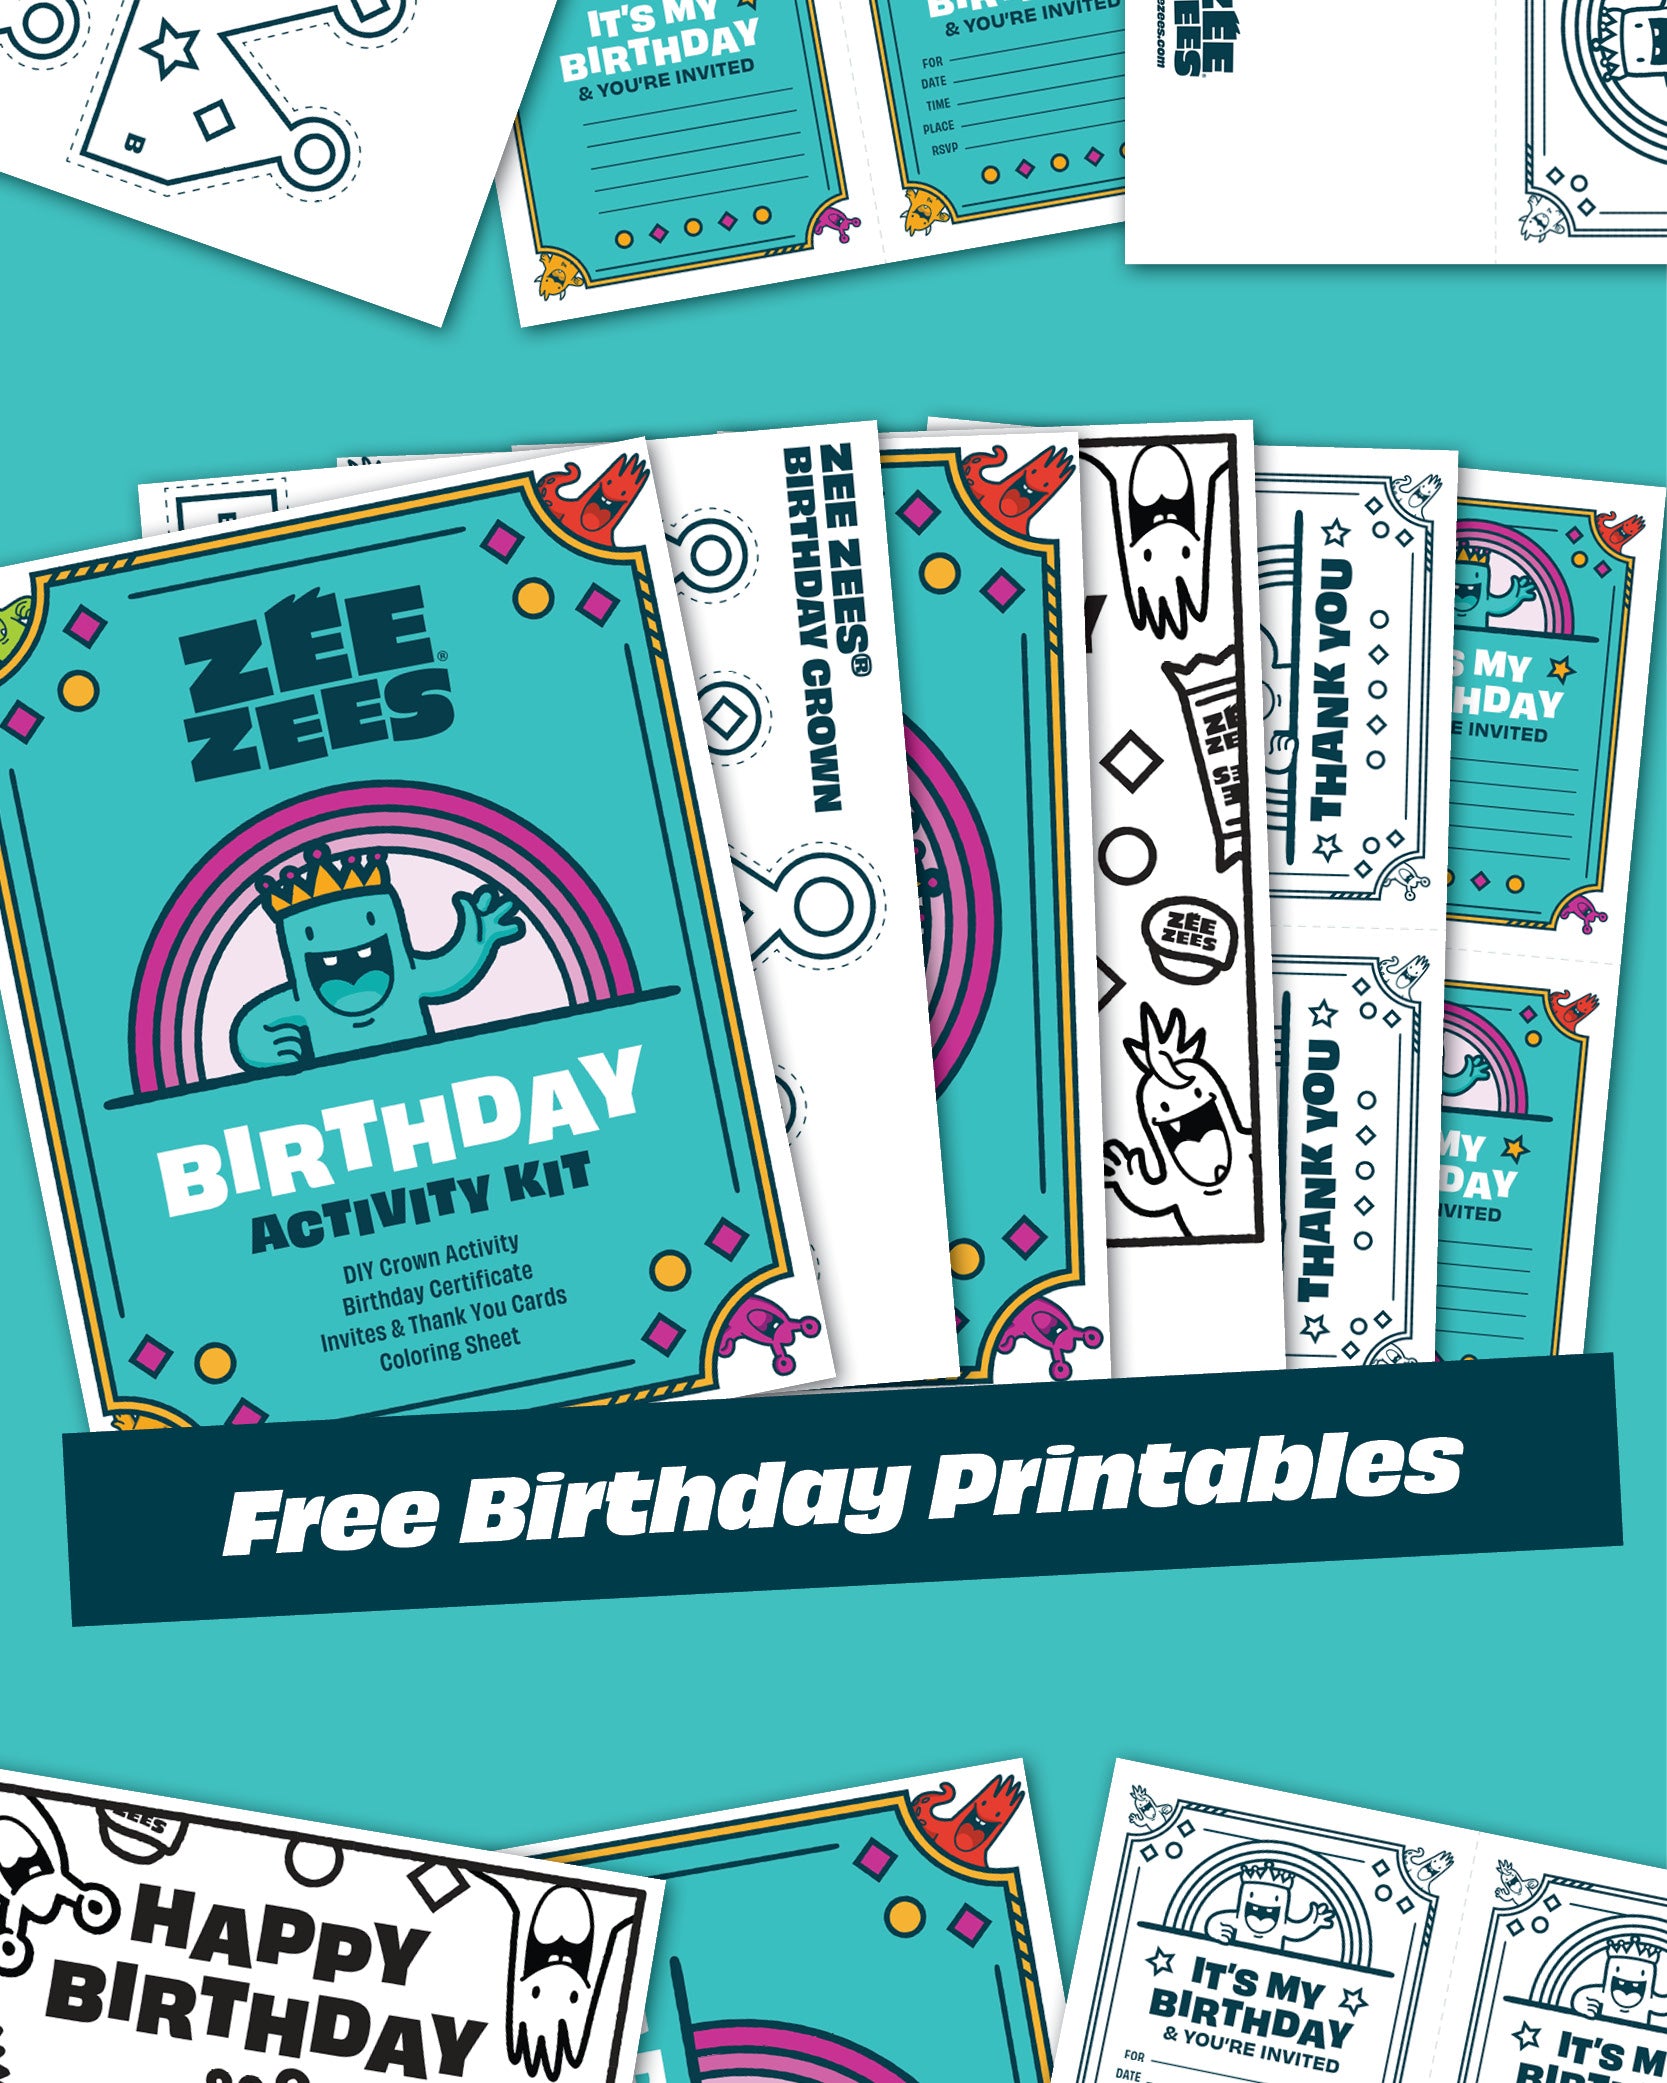 Zee Zees Free Printable Downloads - Birthday Party Kit Invites Certificates